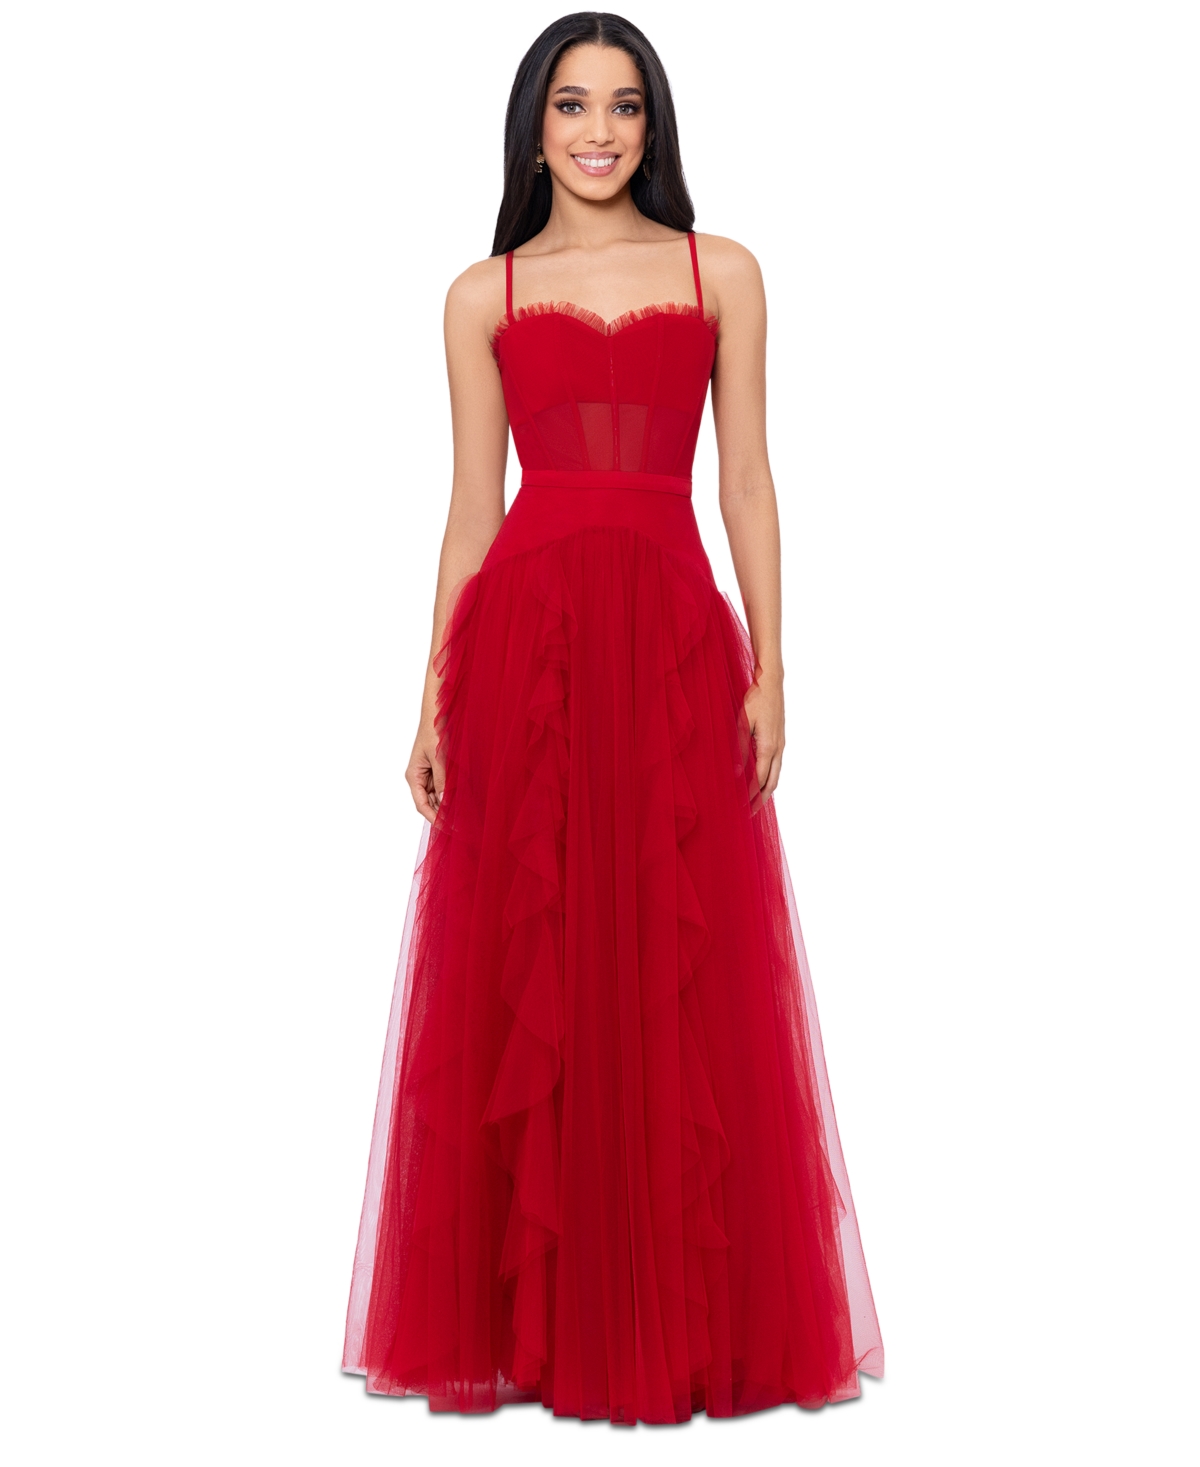 Women's Mesh Ruffled Ball Gown - Red